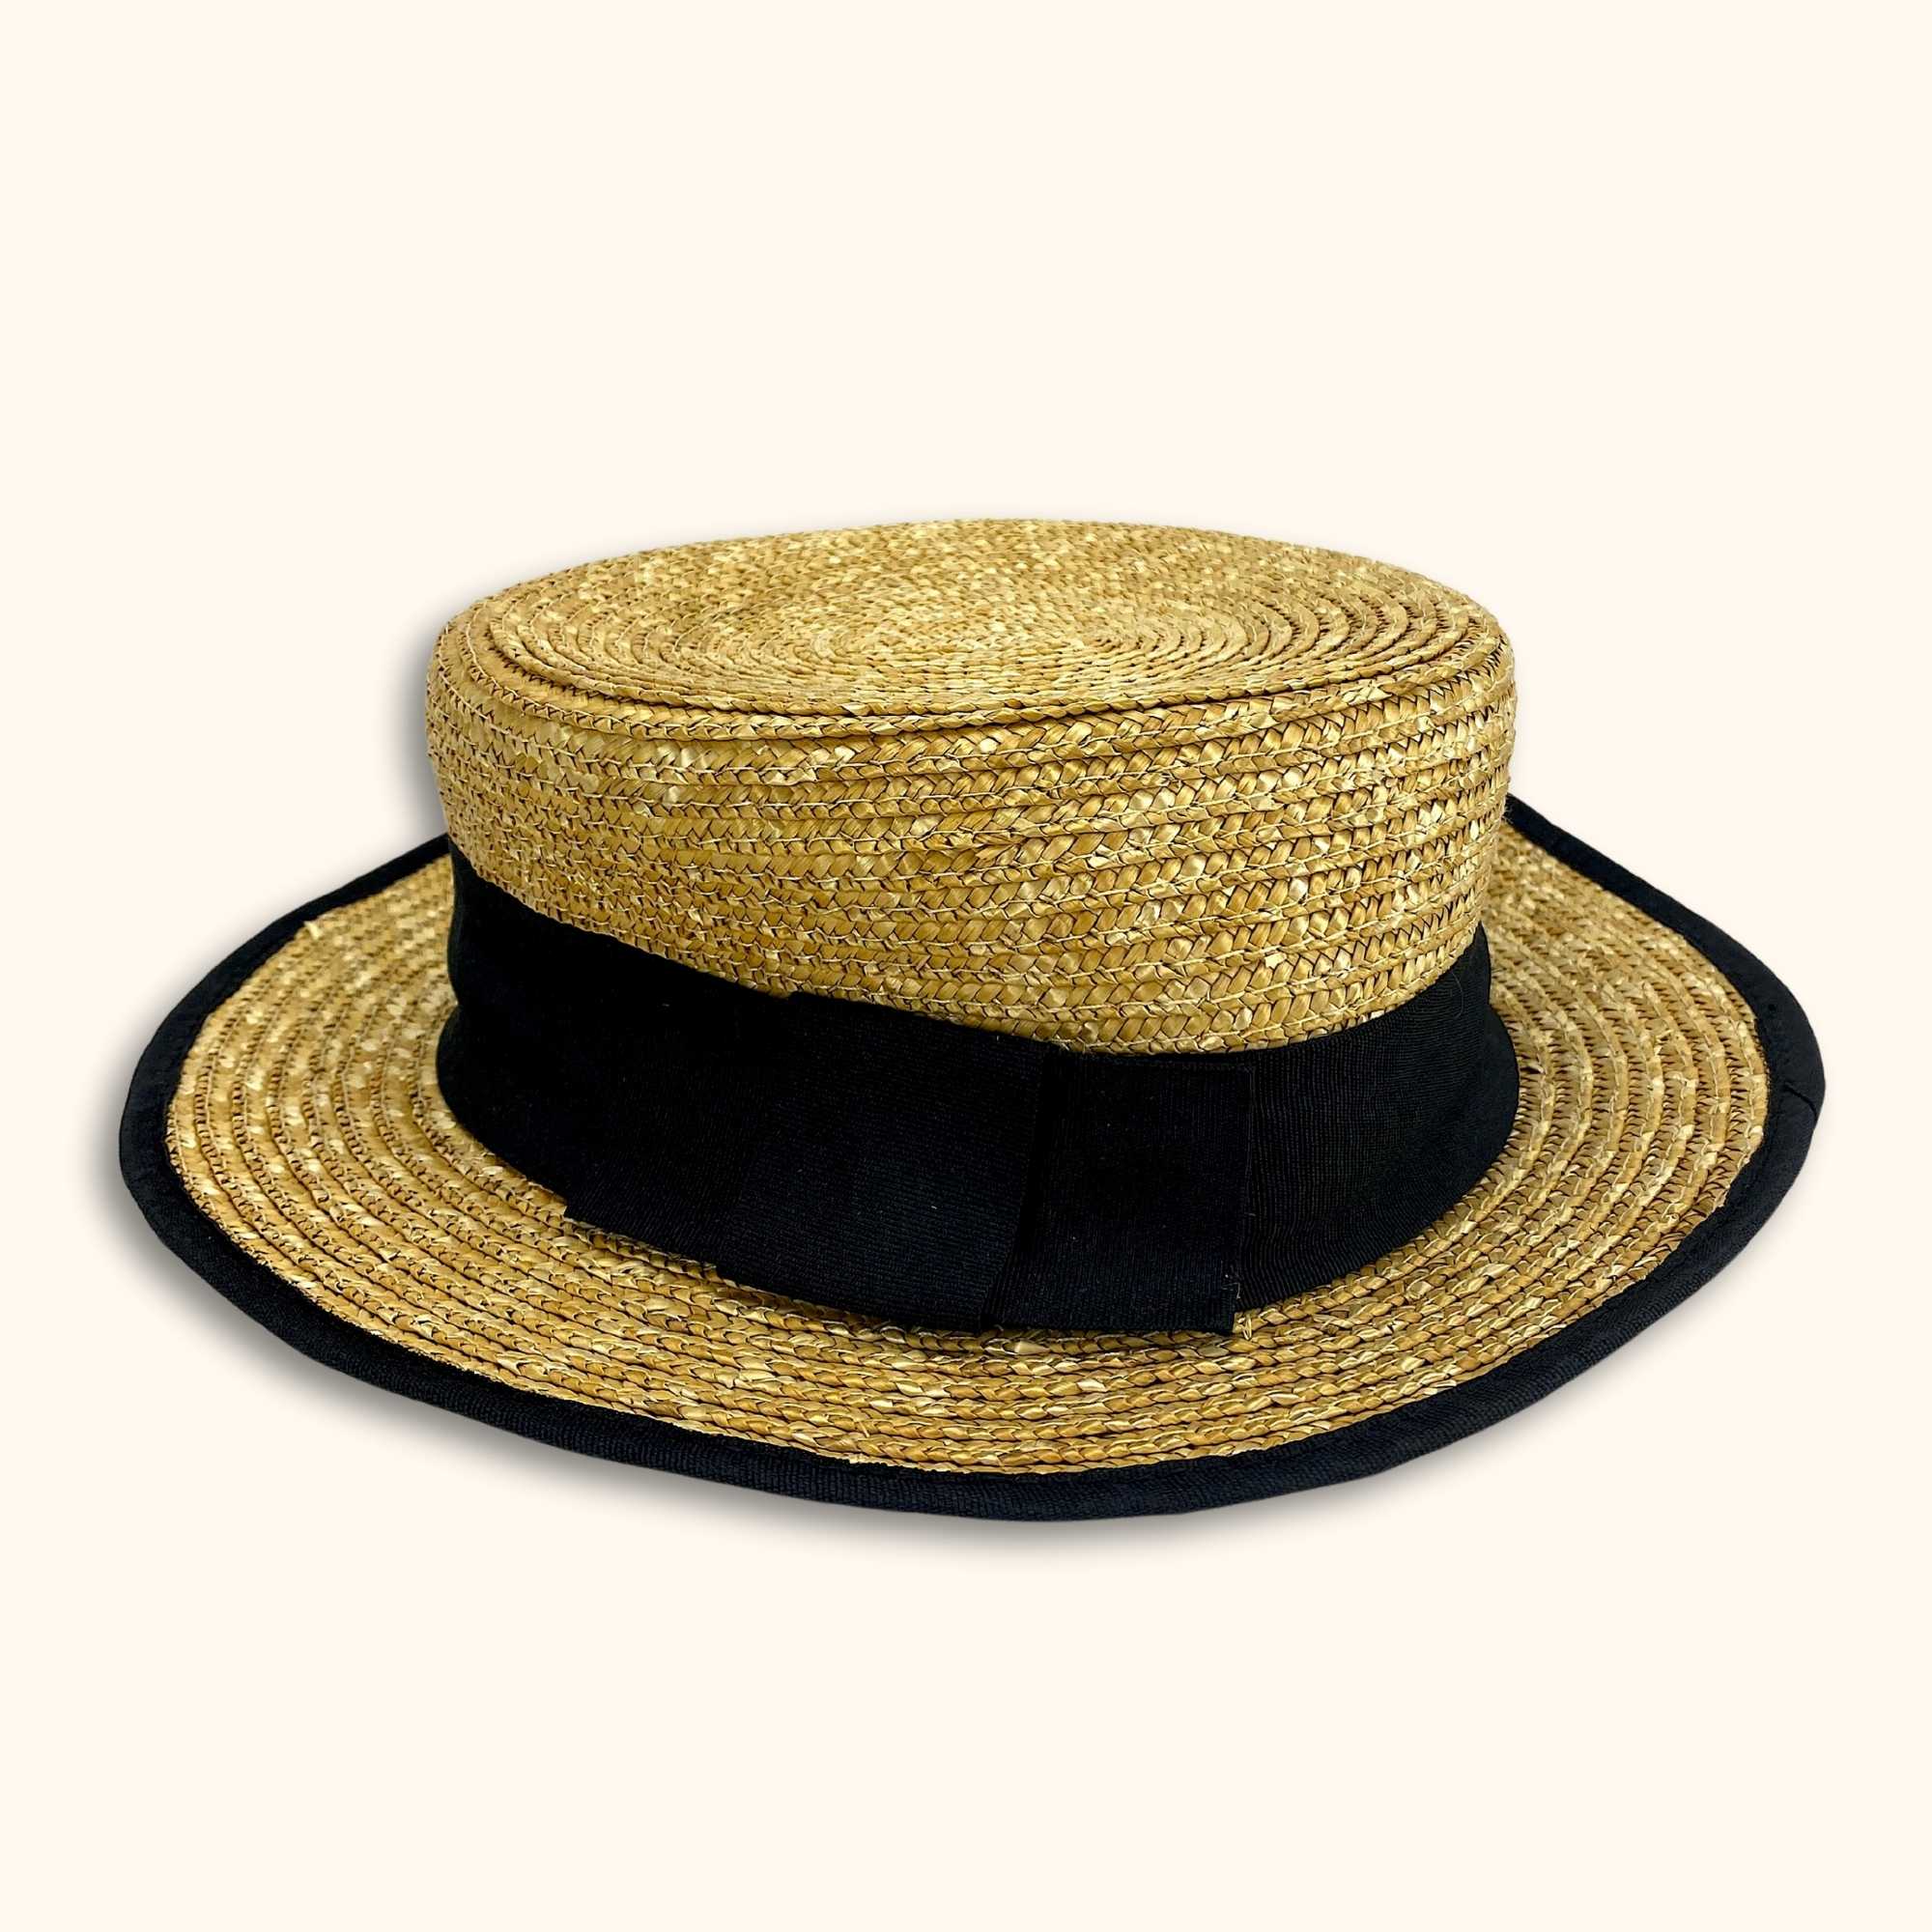 Zara Round Woven Straw Boaters Hat - Zara - Hats